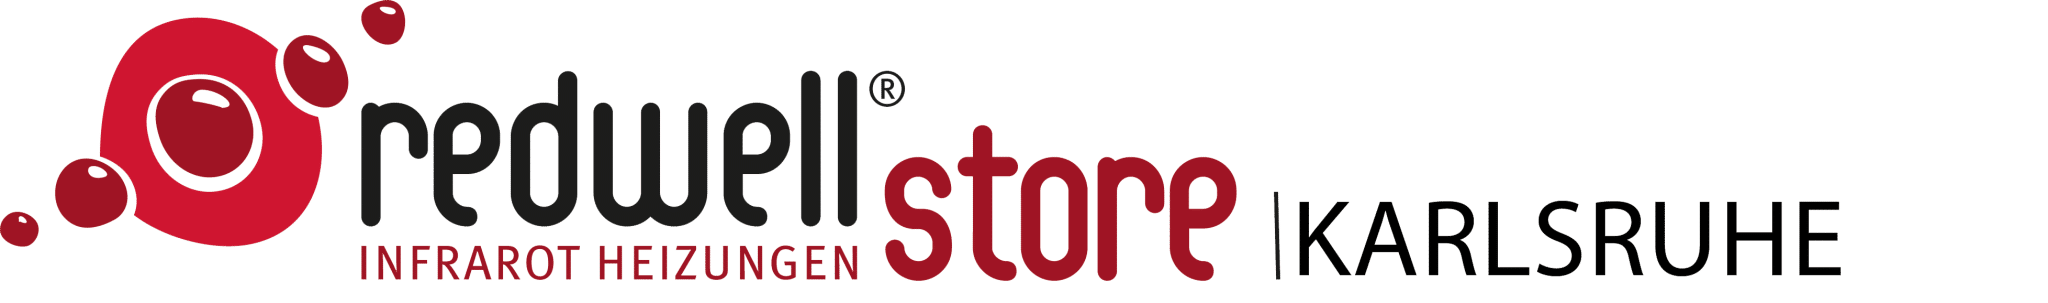 redwell store_logo_karlsruhe